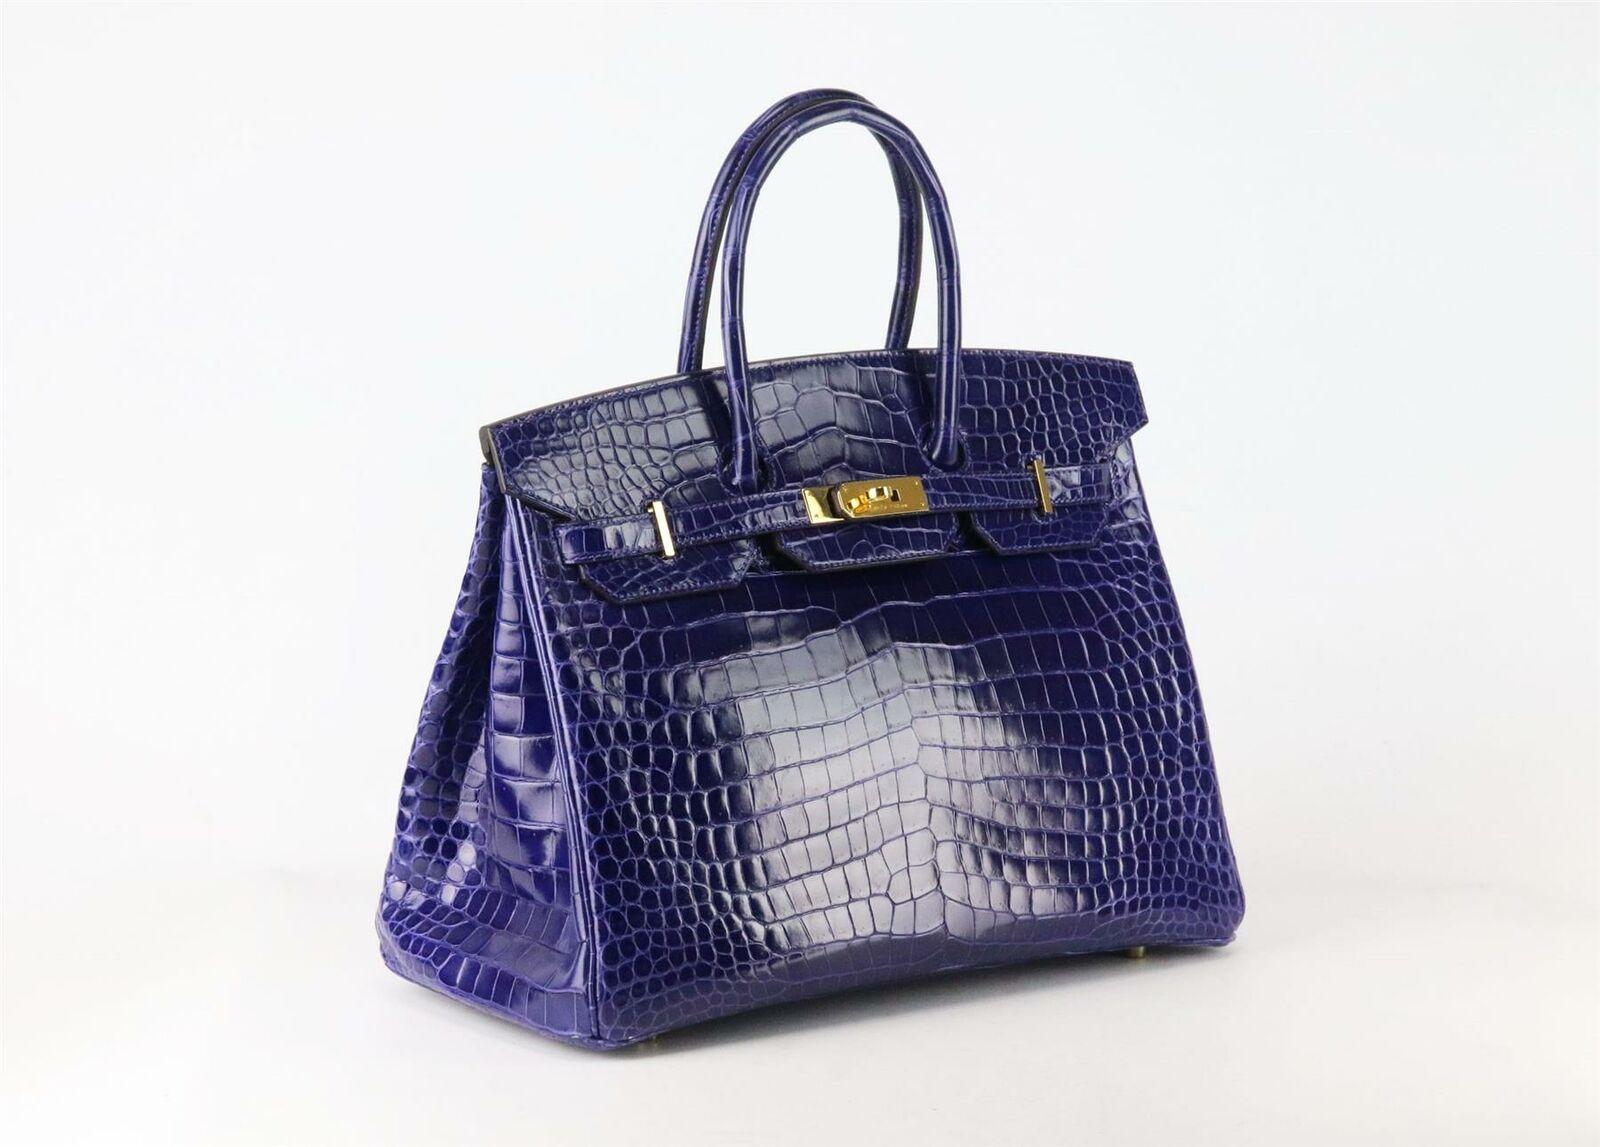 Purple Hermès 2014 Birkin 35cm Porosus Crocodile Leather Bag For Sale